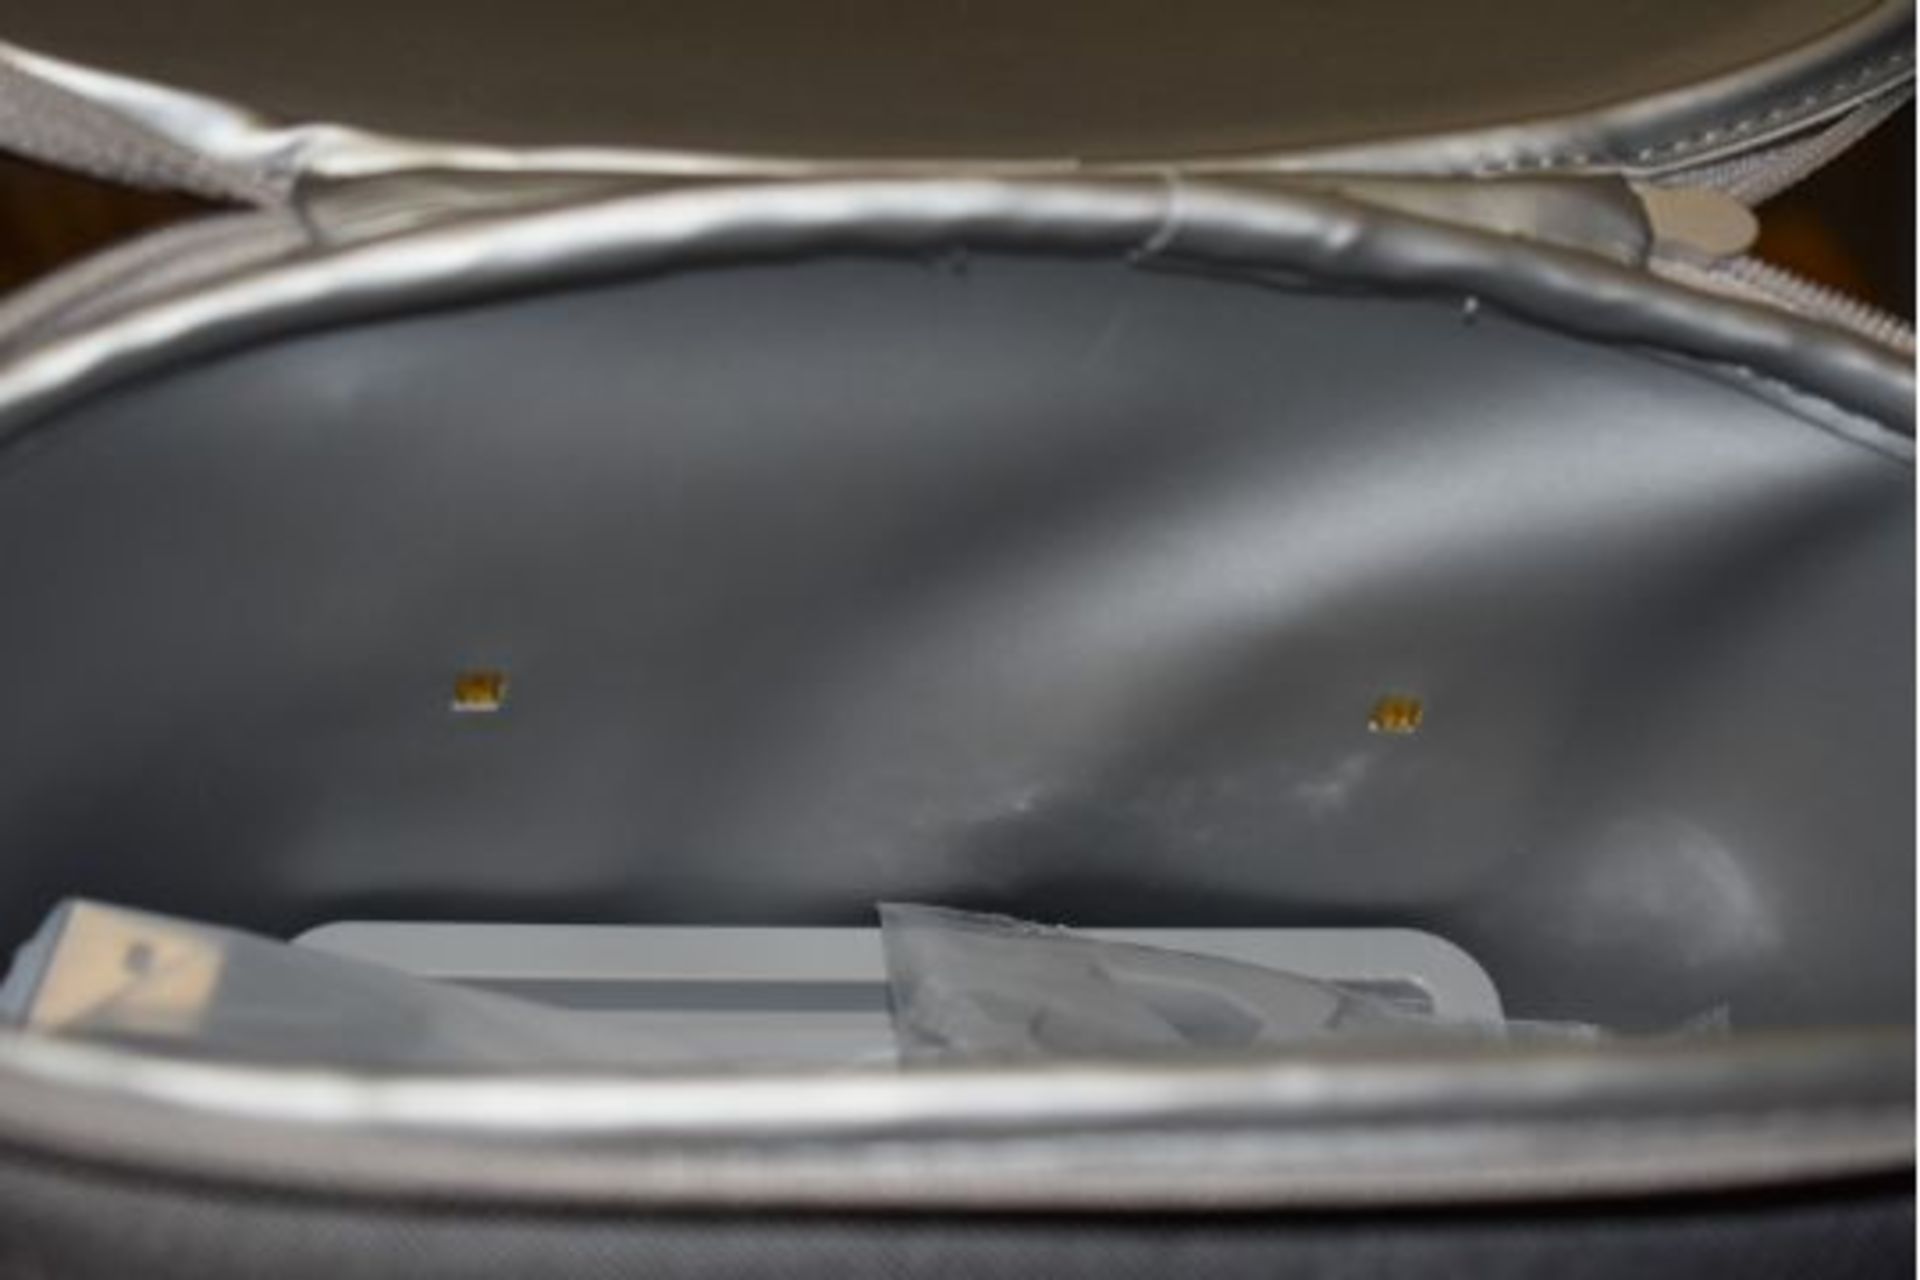 1 x Homedics UV Clean Portable Sanitiser Bag - Kills Upto 99.9% of Bacteria & Viruses in Just 60 - Image 16 of 24